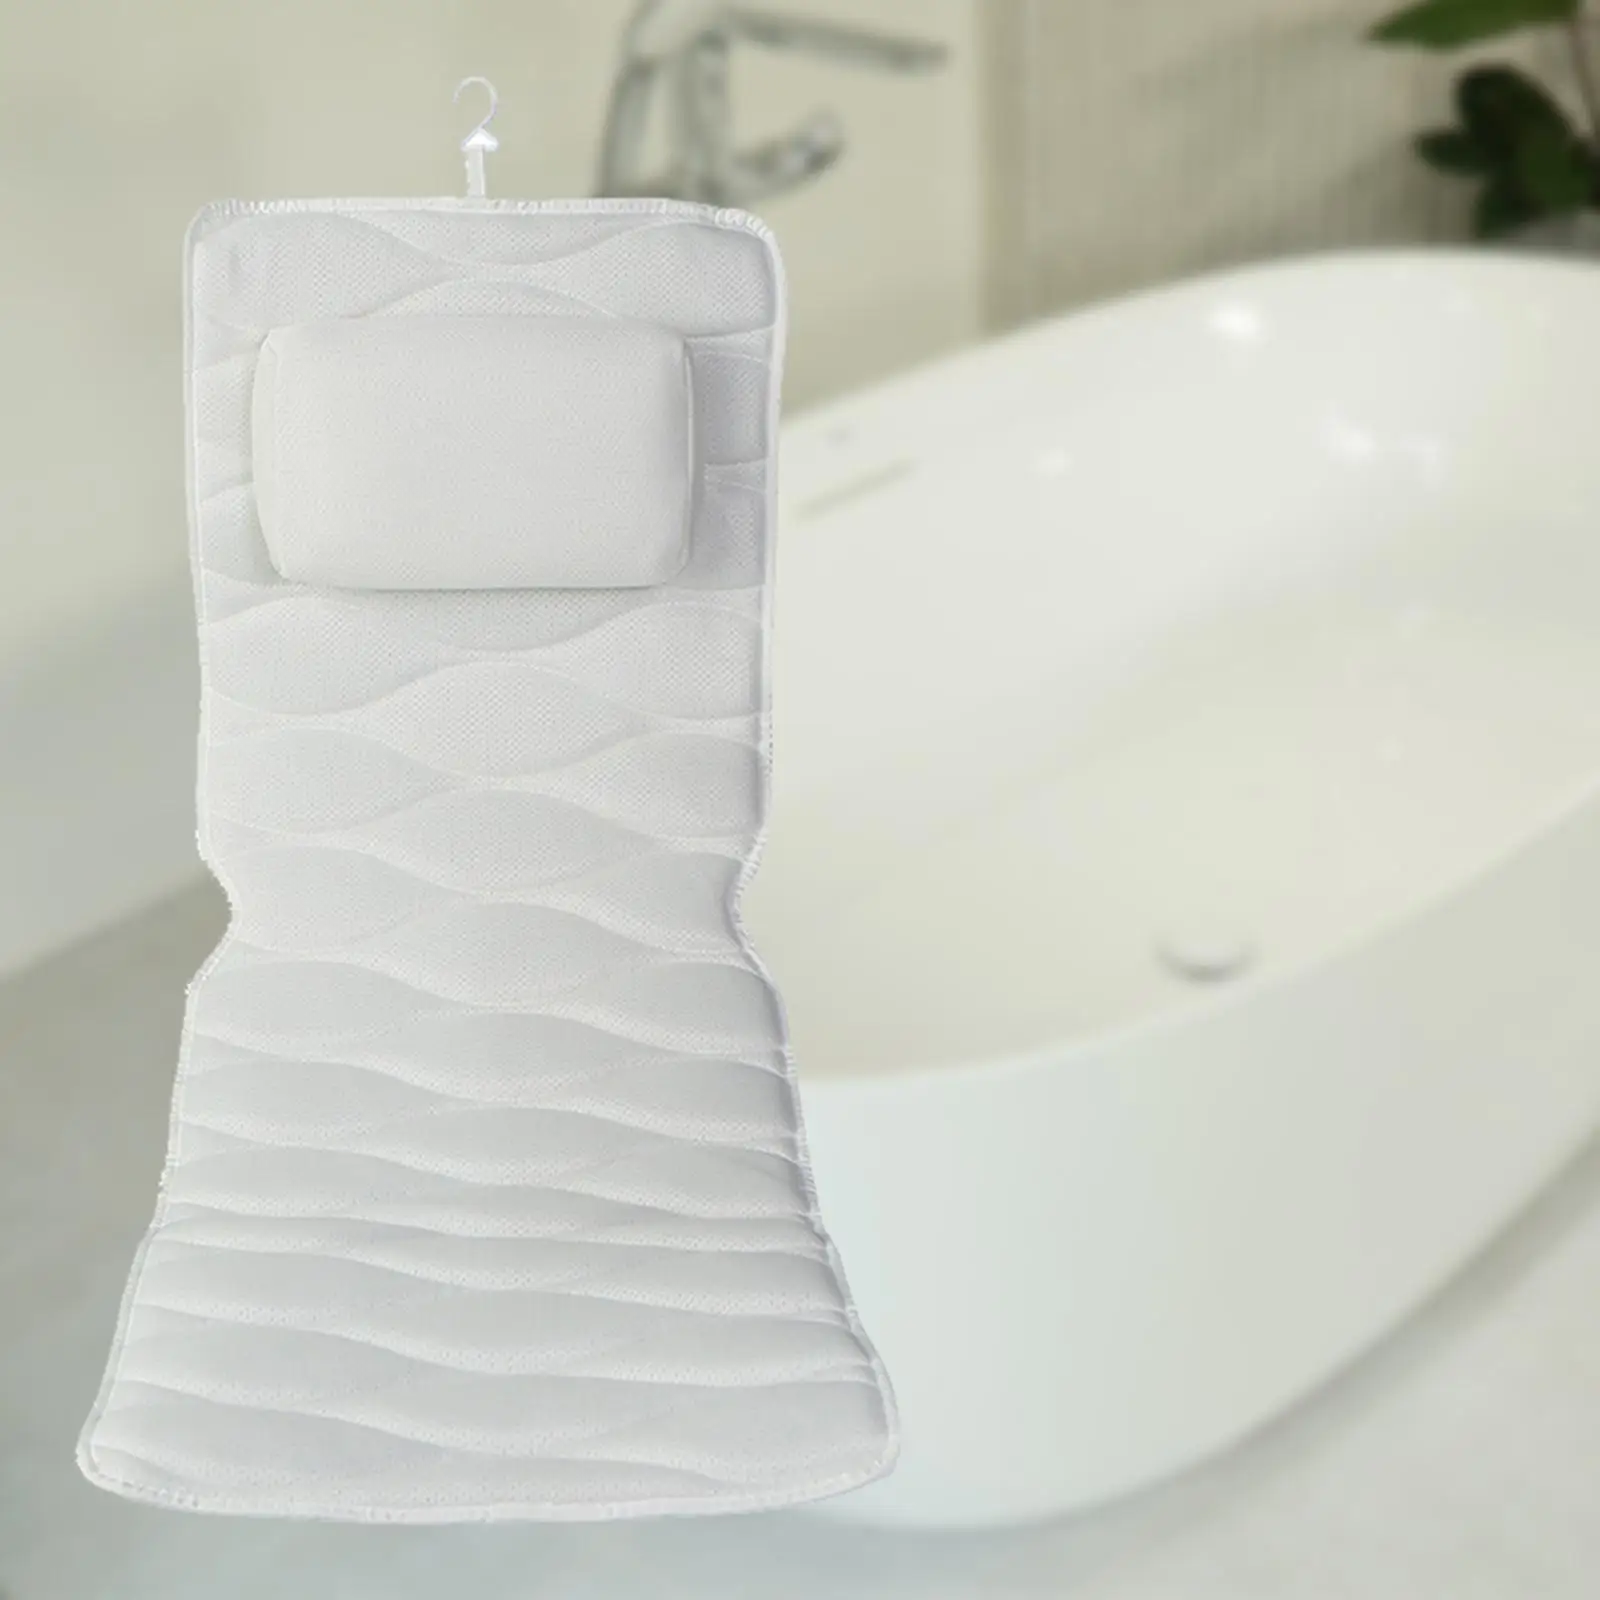 Bath Pillow Soft Bathing Pad Quilted Mattress for Soak Bathtub Head Neck